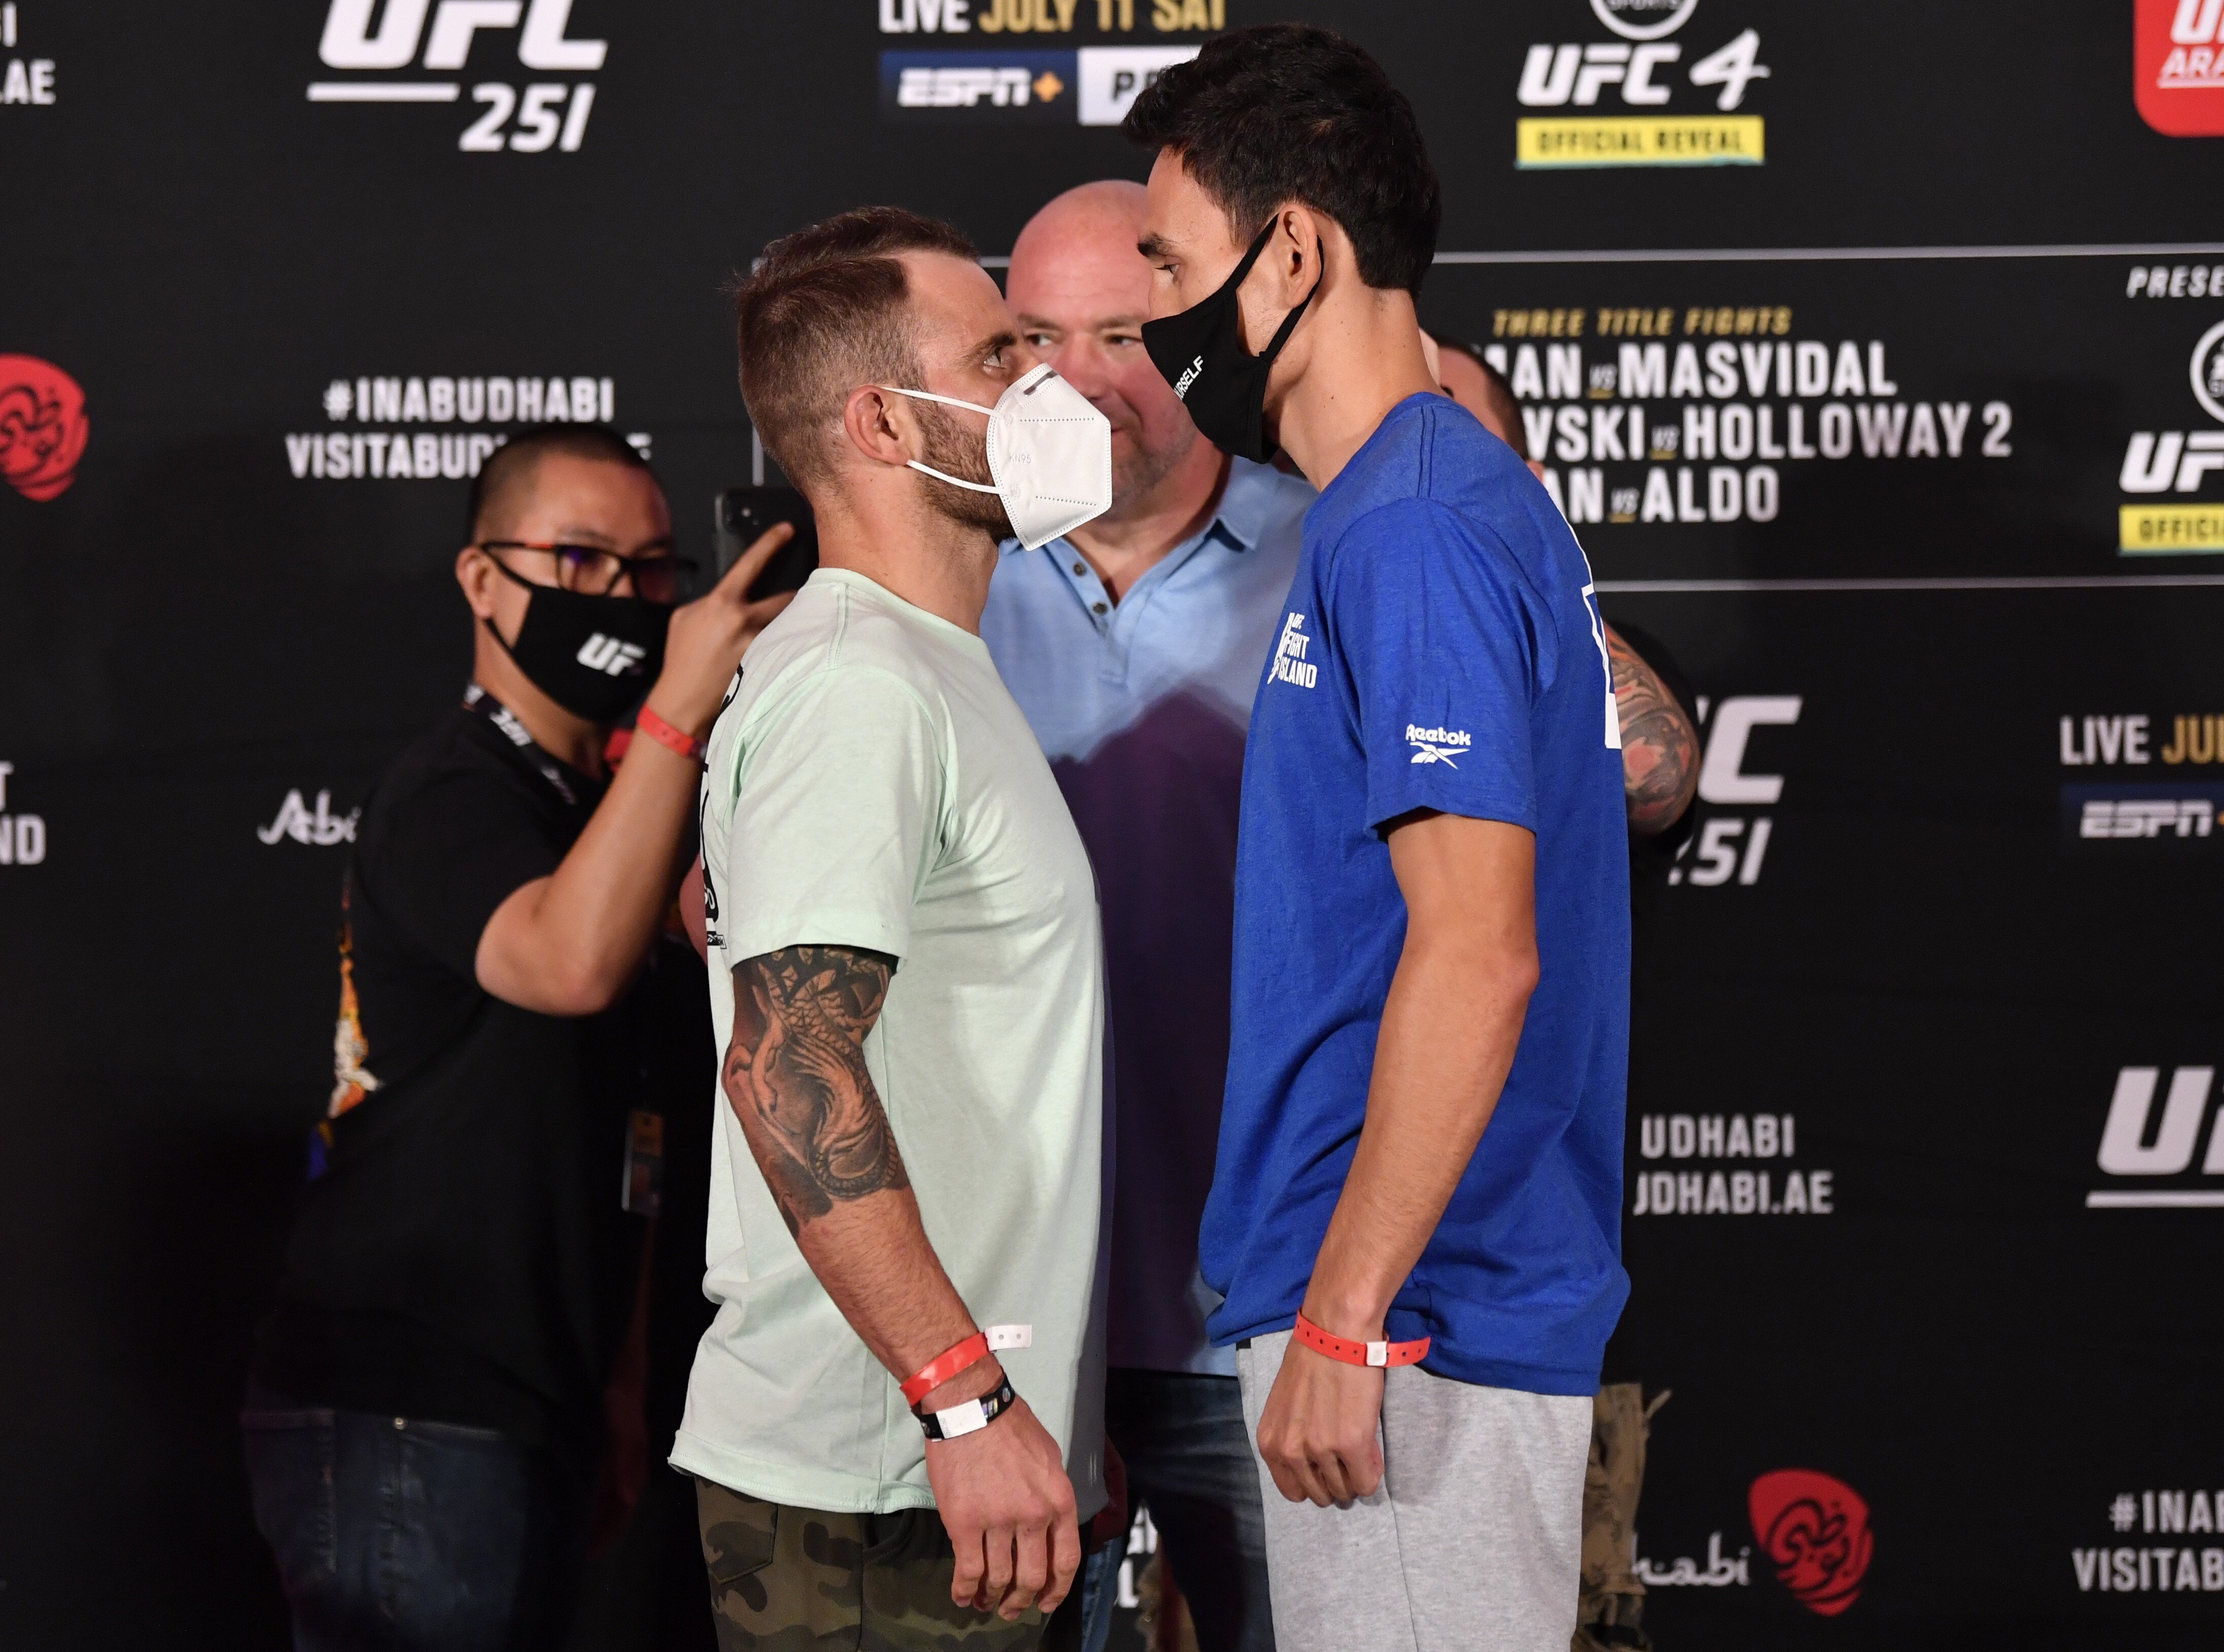 Alexander Volkanovski (left) and Max Holloway face off during the UFC 251 official weigh-in inside Flash Forum in Abu Dhabi. Photos: Jeff Bottari/Zuffa LLC